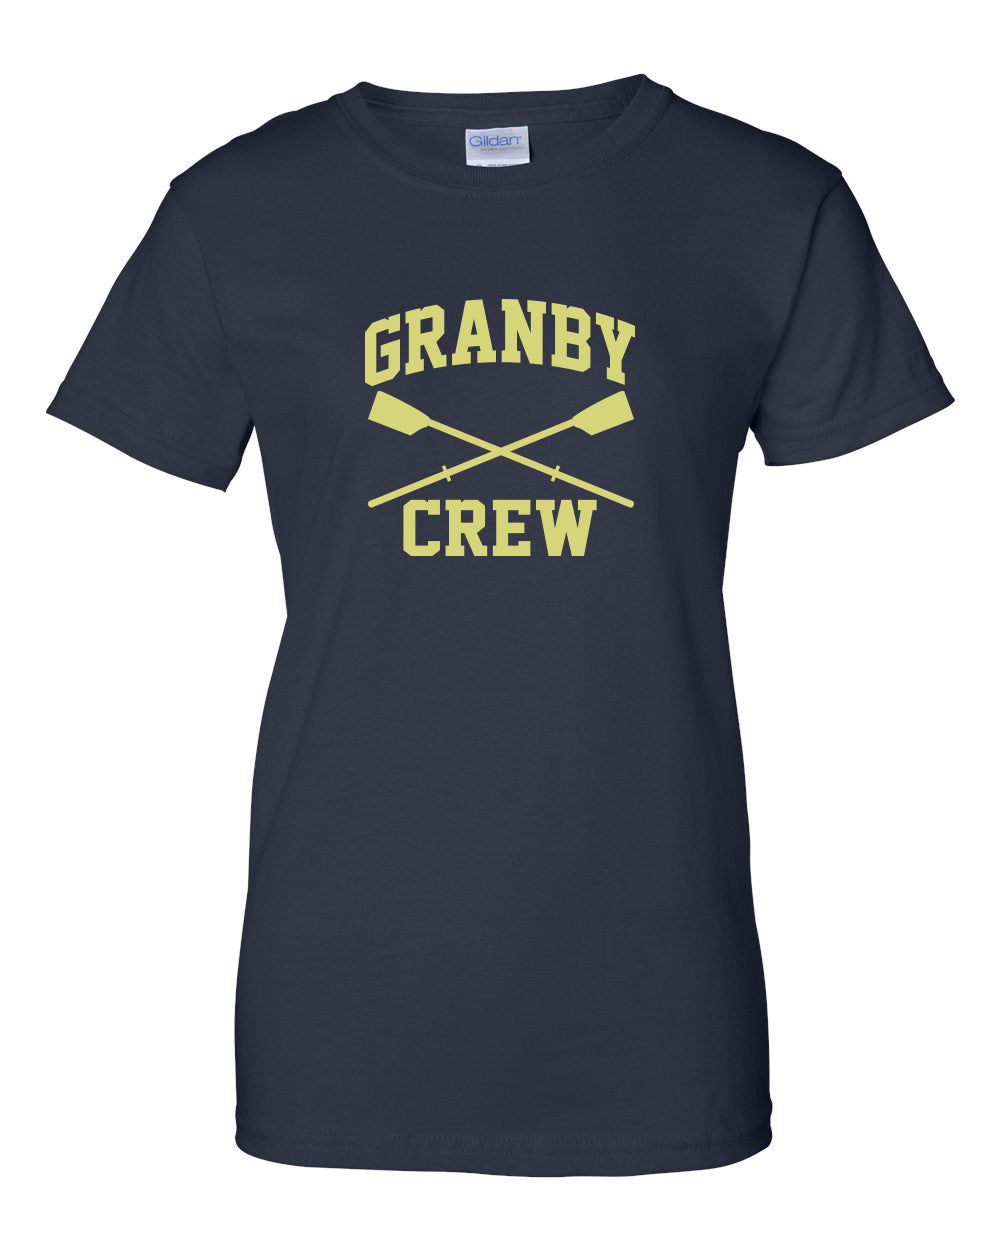 100% Cotton Granby Crew Women's Team Spirit T-Shirt